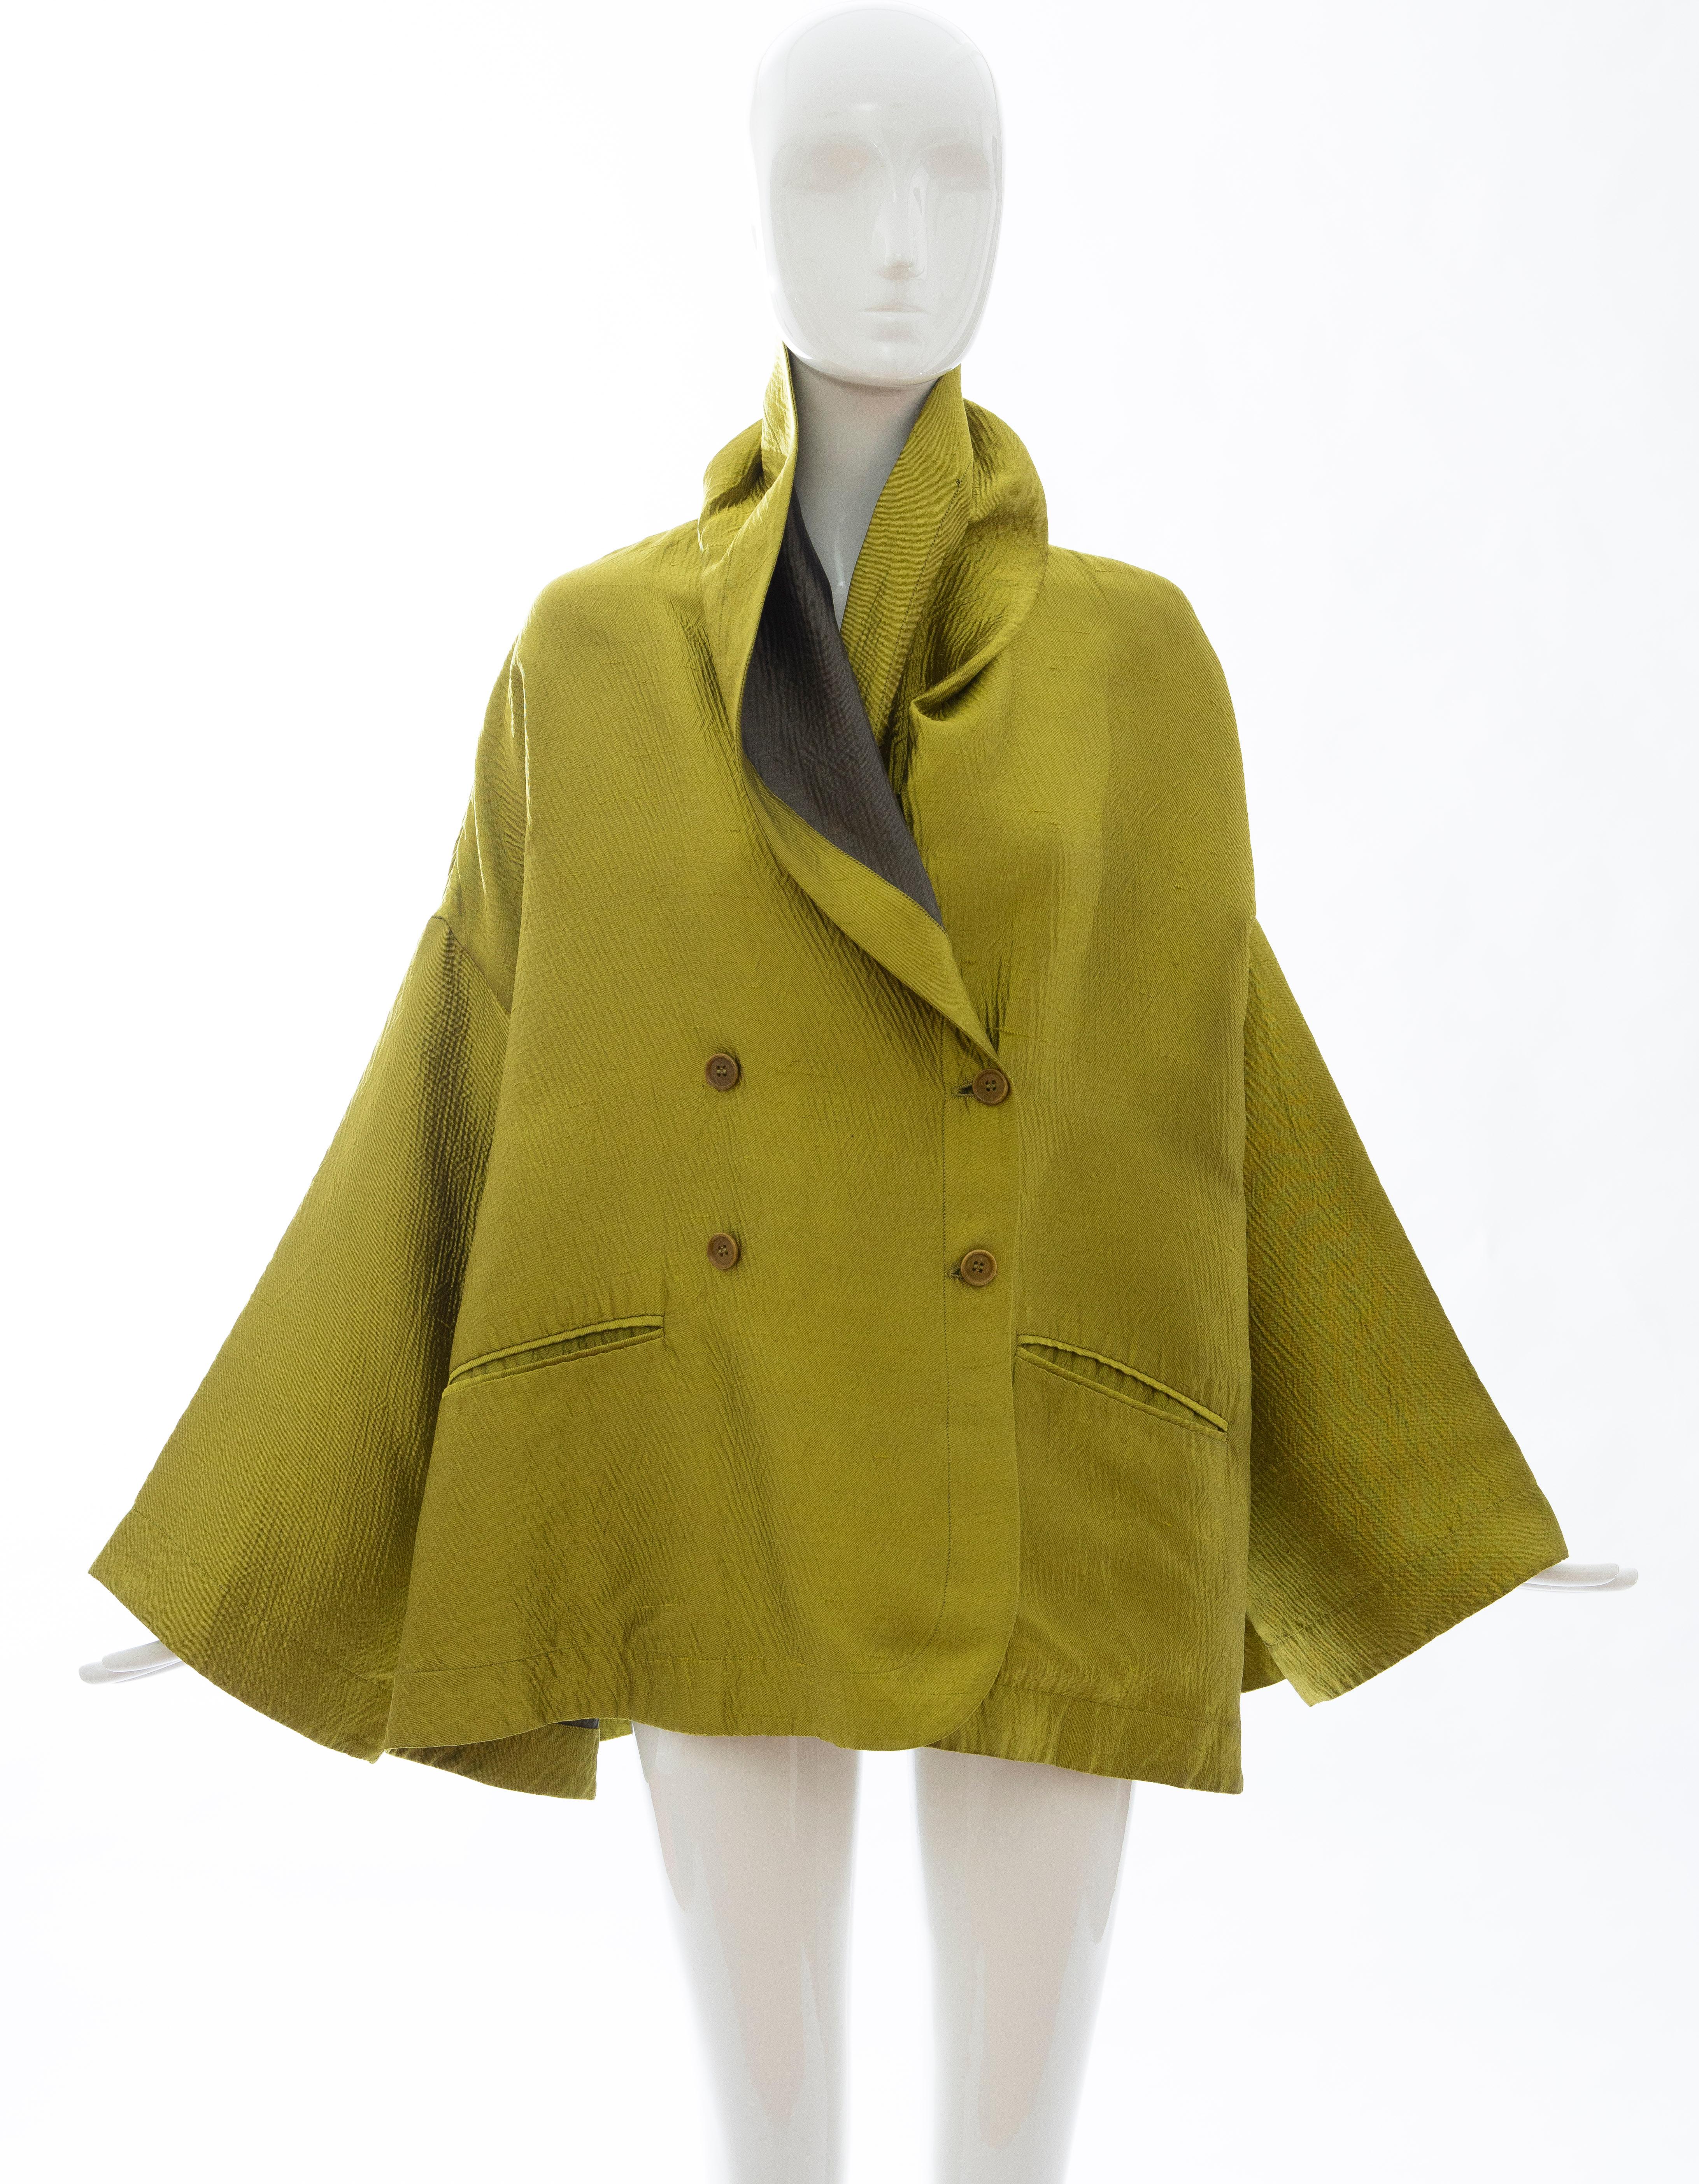 Romeo Gigli Runway Silk Cotton Chartreuse Green Evening Jacket, Fall 1991 9